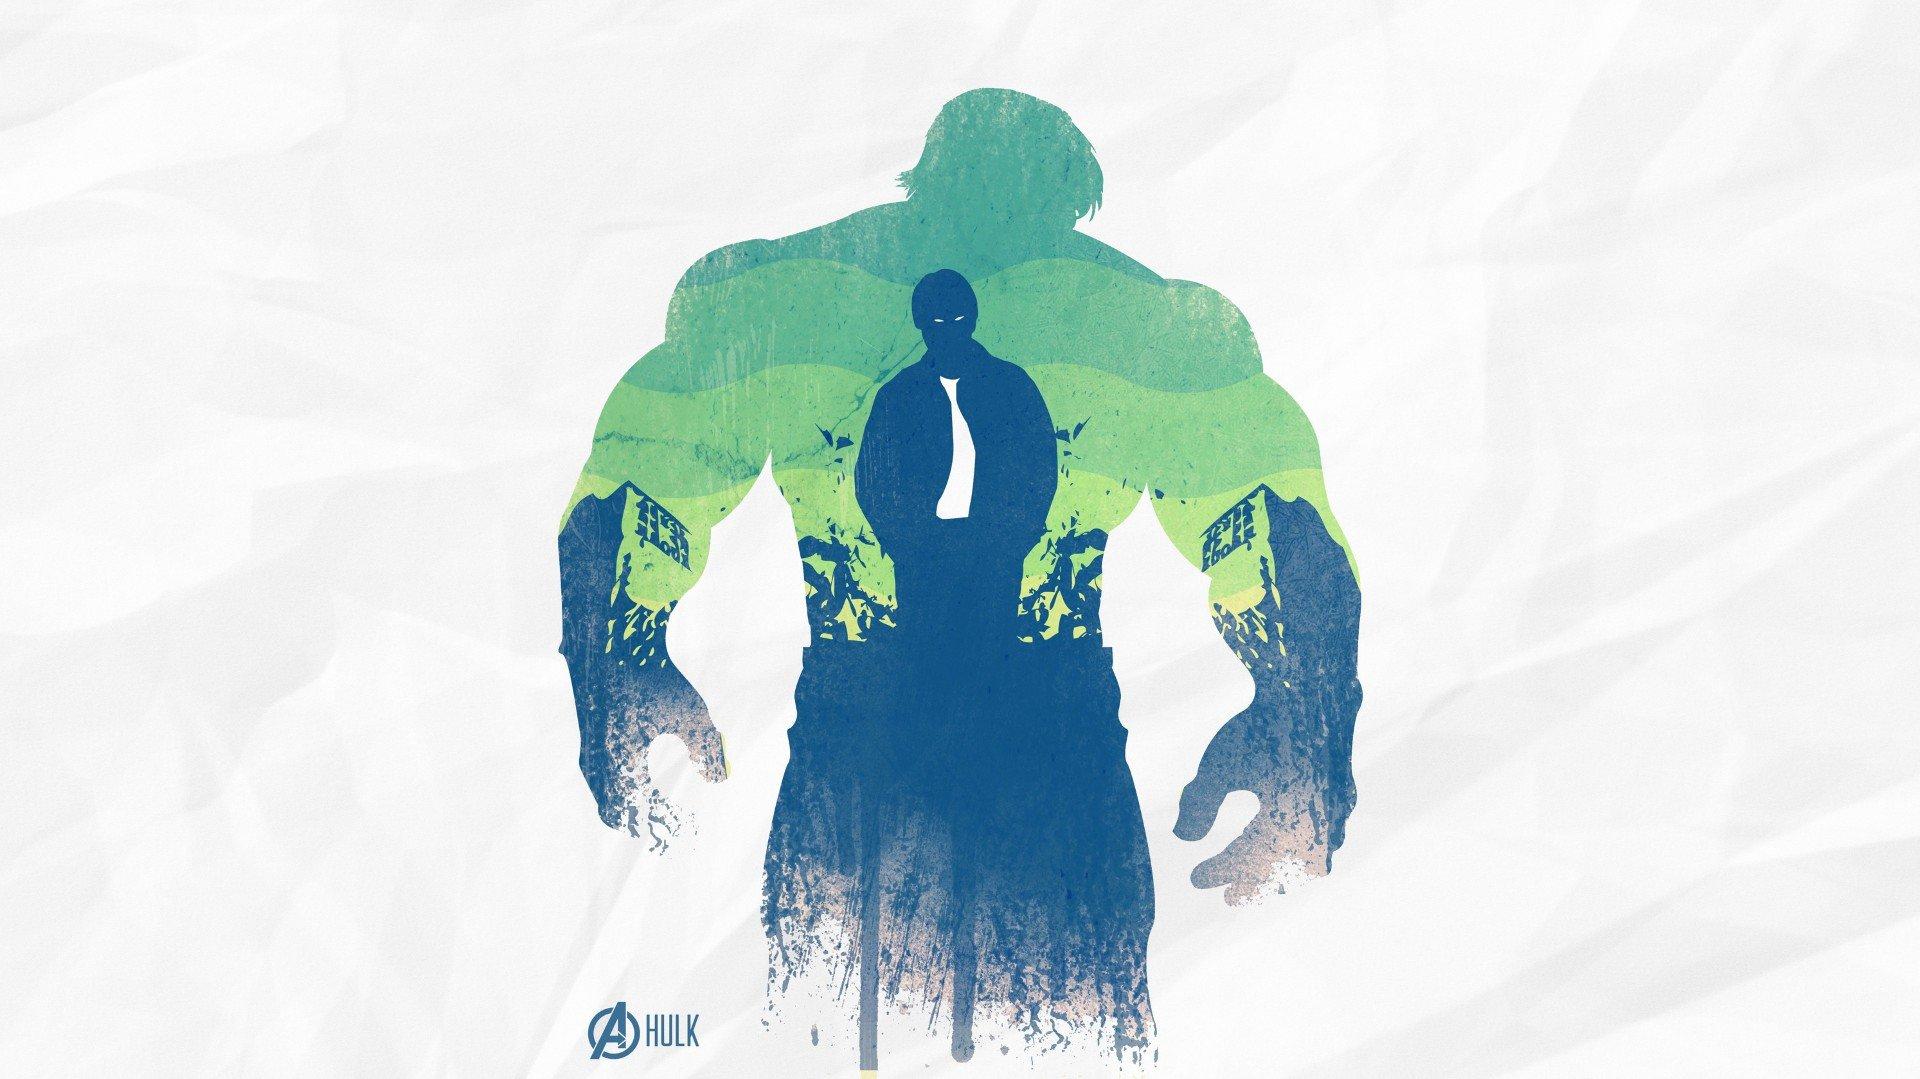 Desktop Wallpaper Hulk Avengers Artwork Hd Image Picture